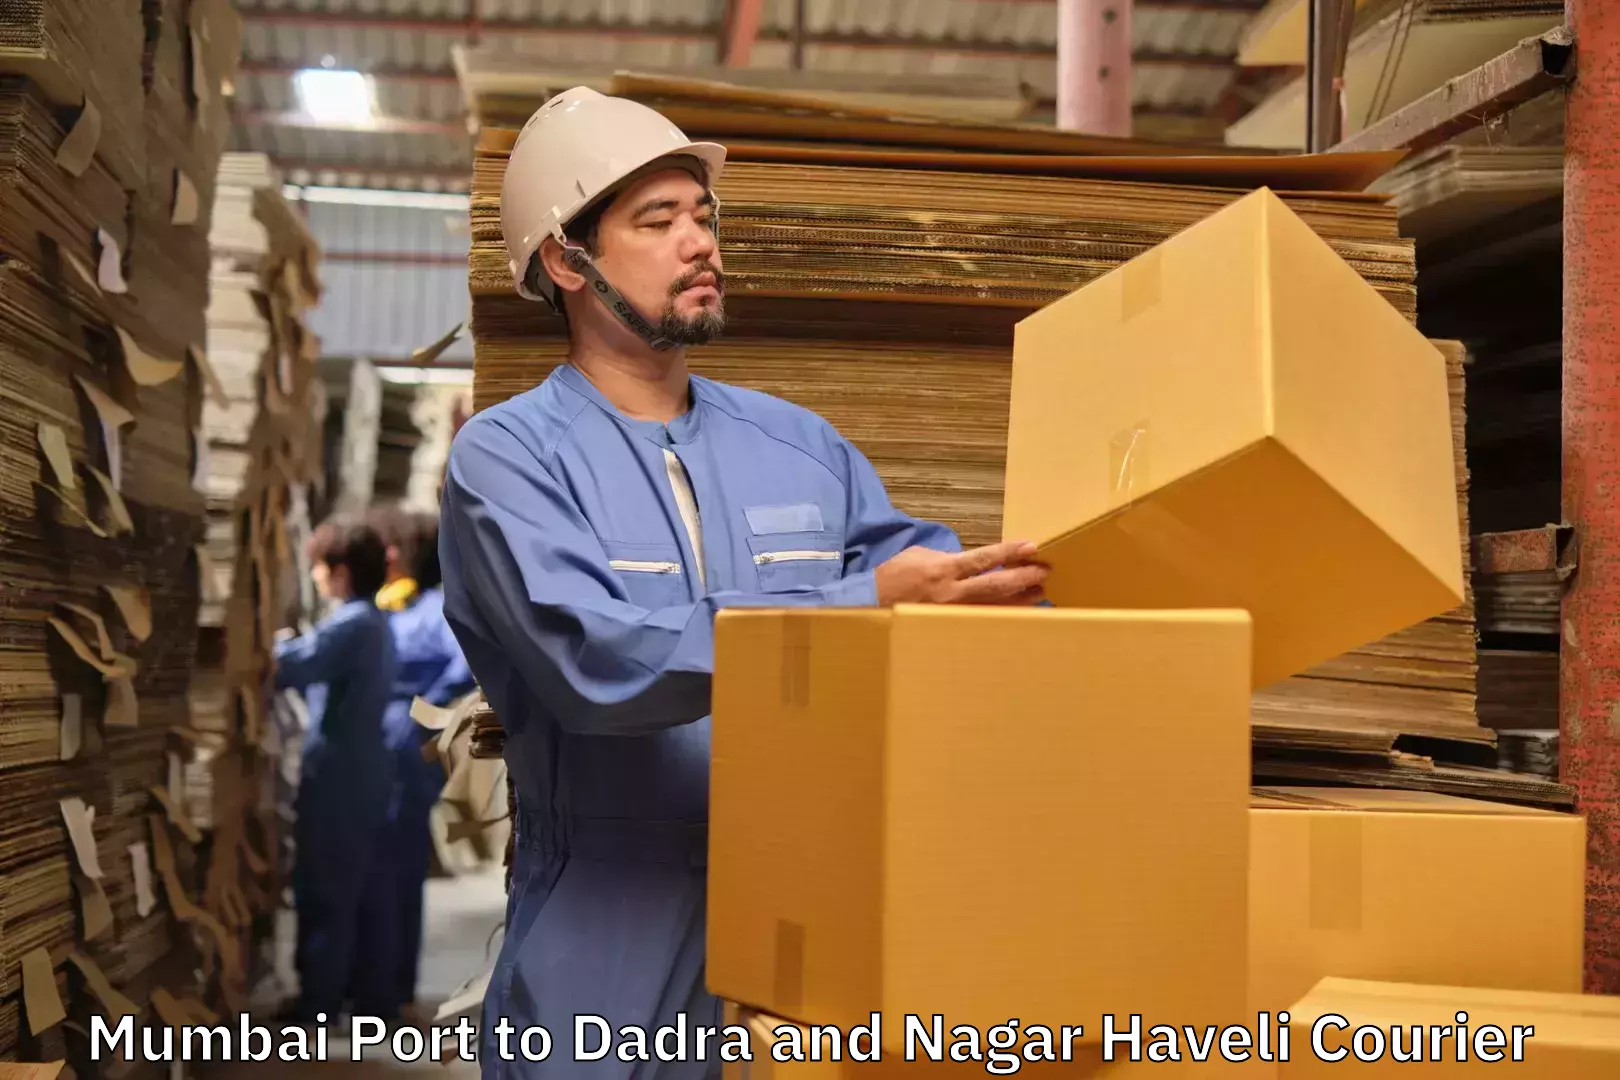 Luggage delivery logistics in Mumbai Port to Silvassa